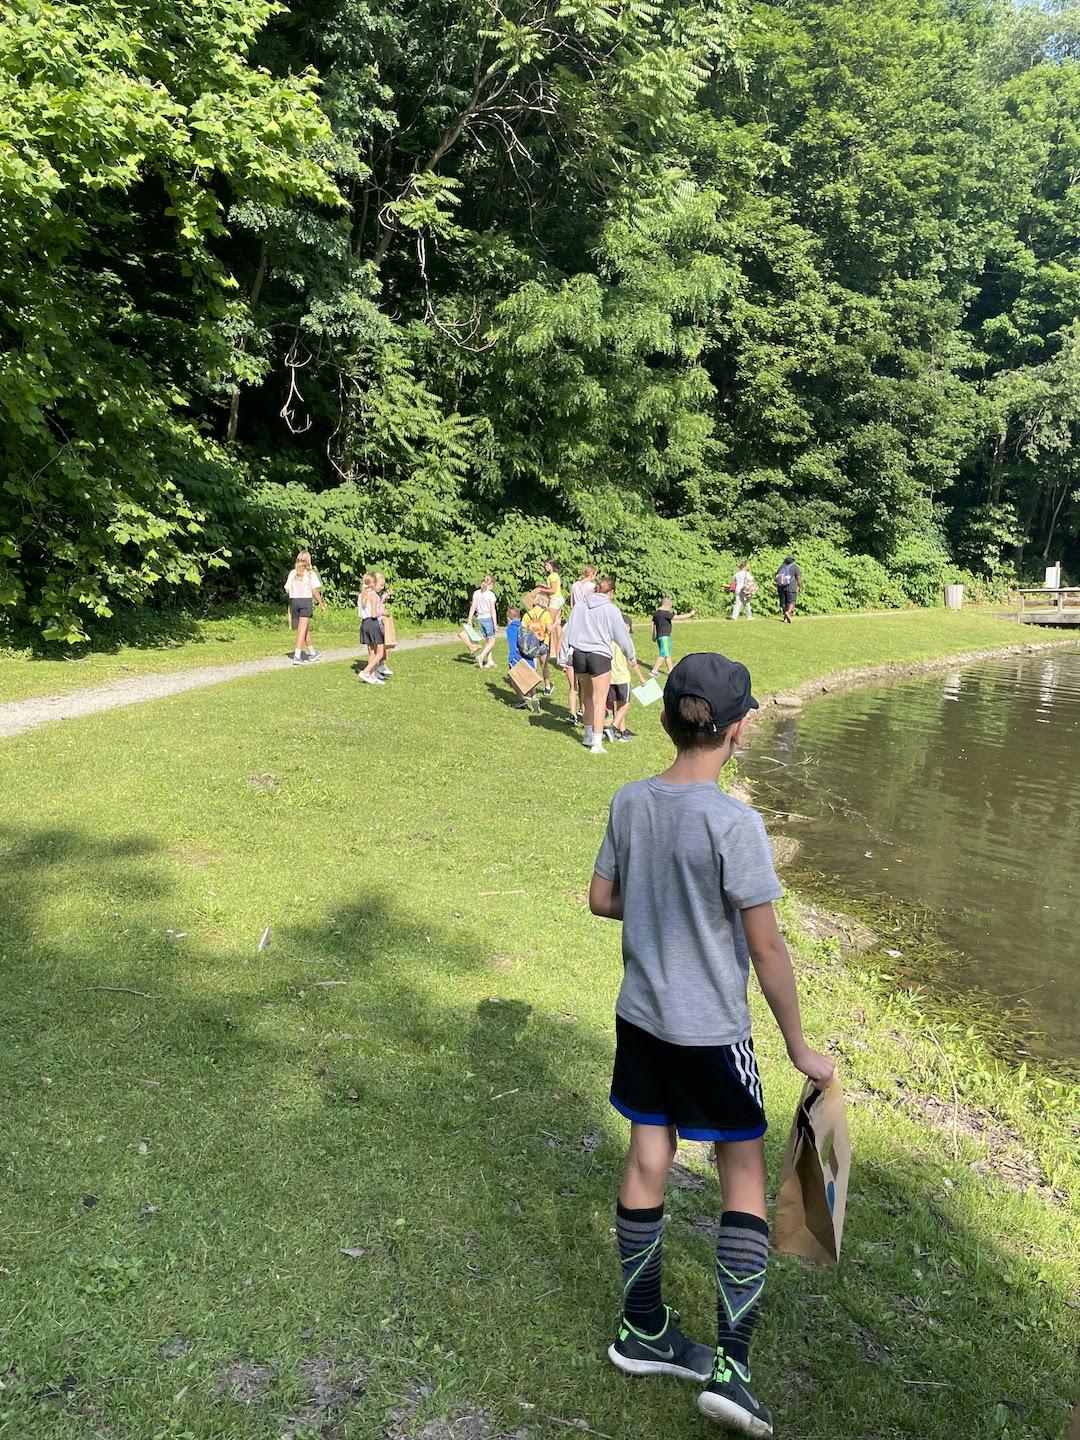 Campers enjoy a scavenger hunt around BY Pond